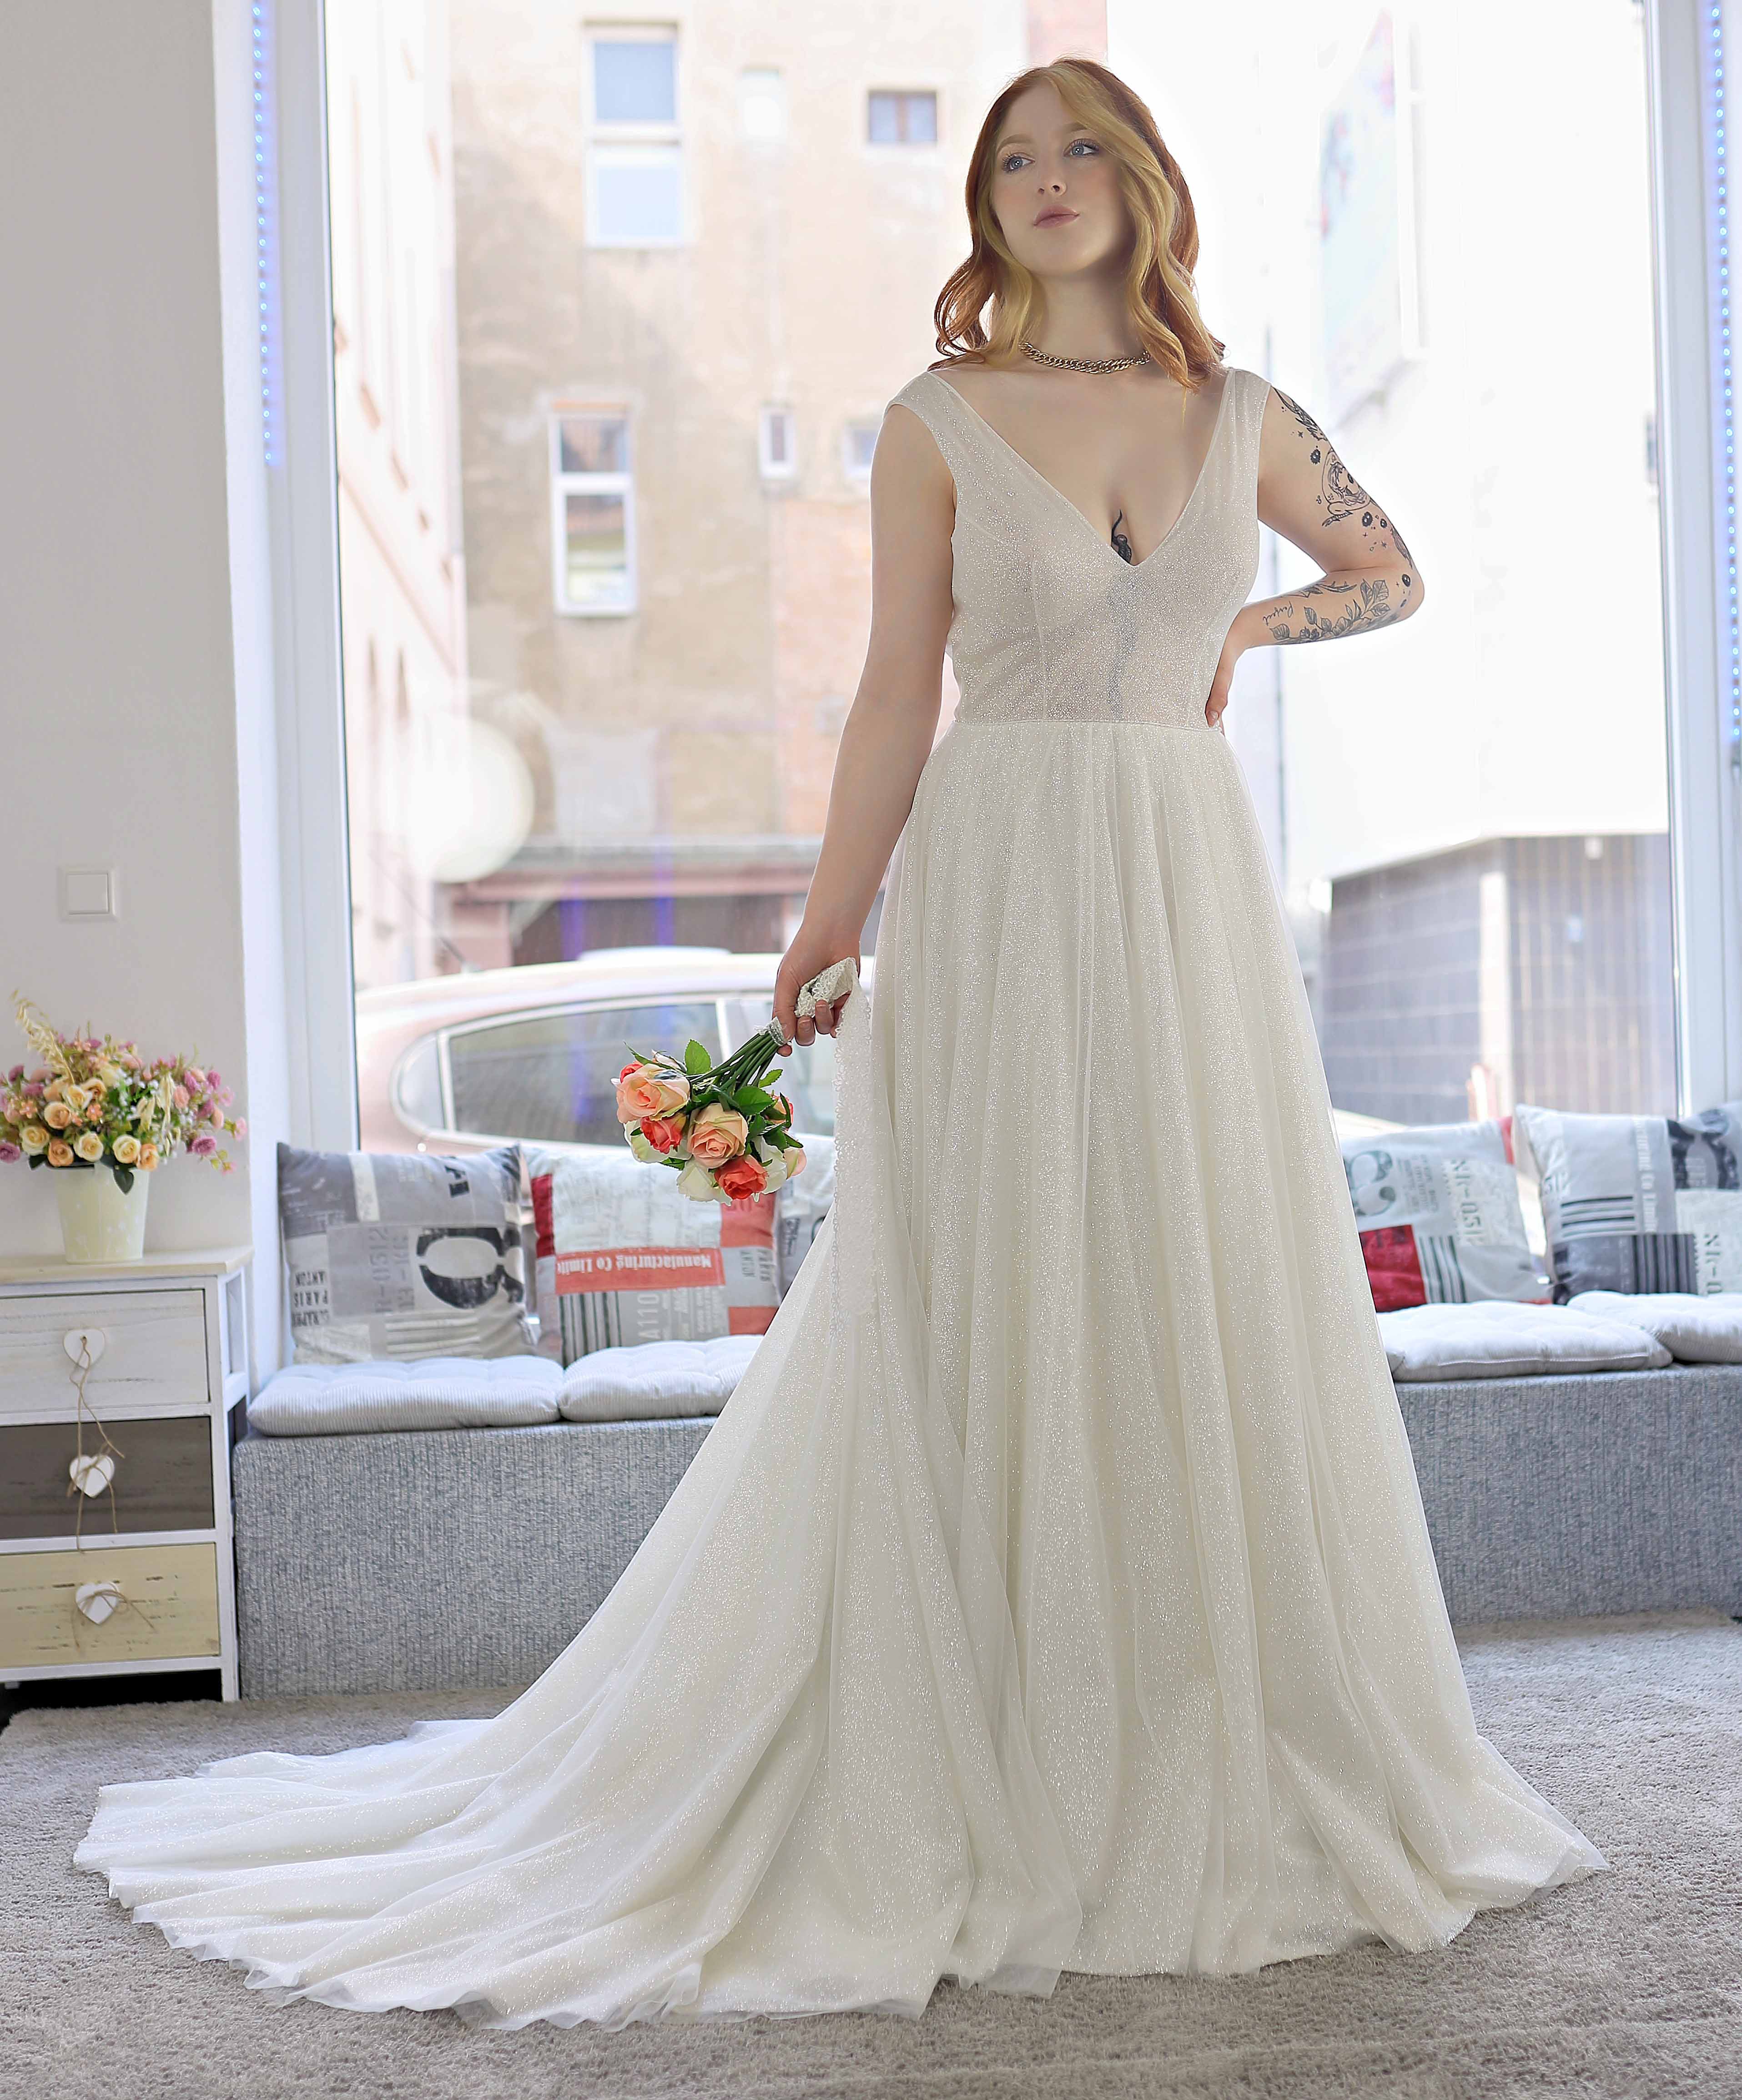 Schantal Brautkleid aus der Kollektion „Pilar“, Modell 14025.